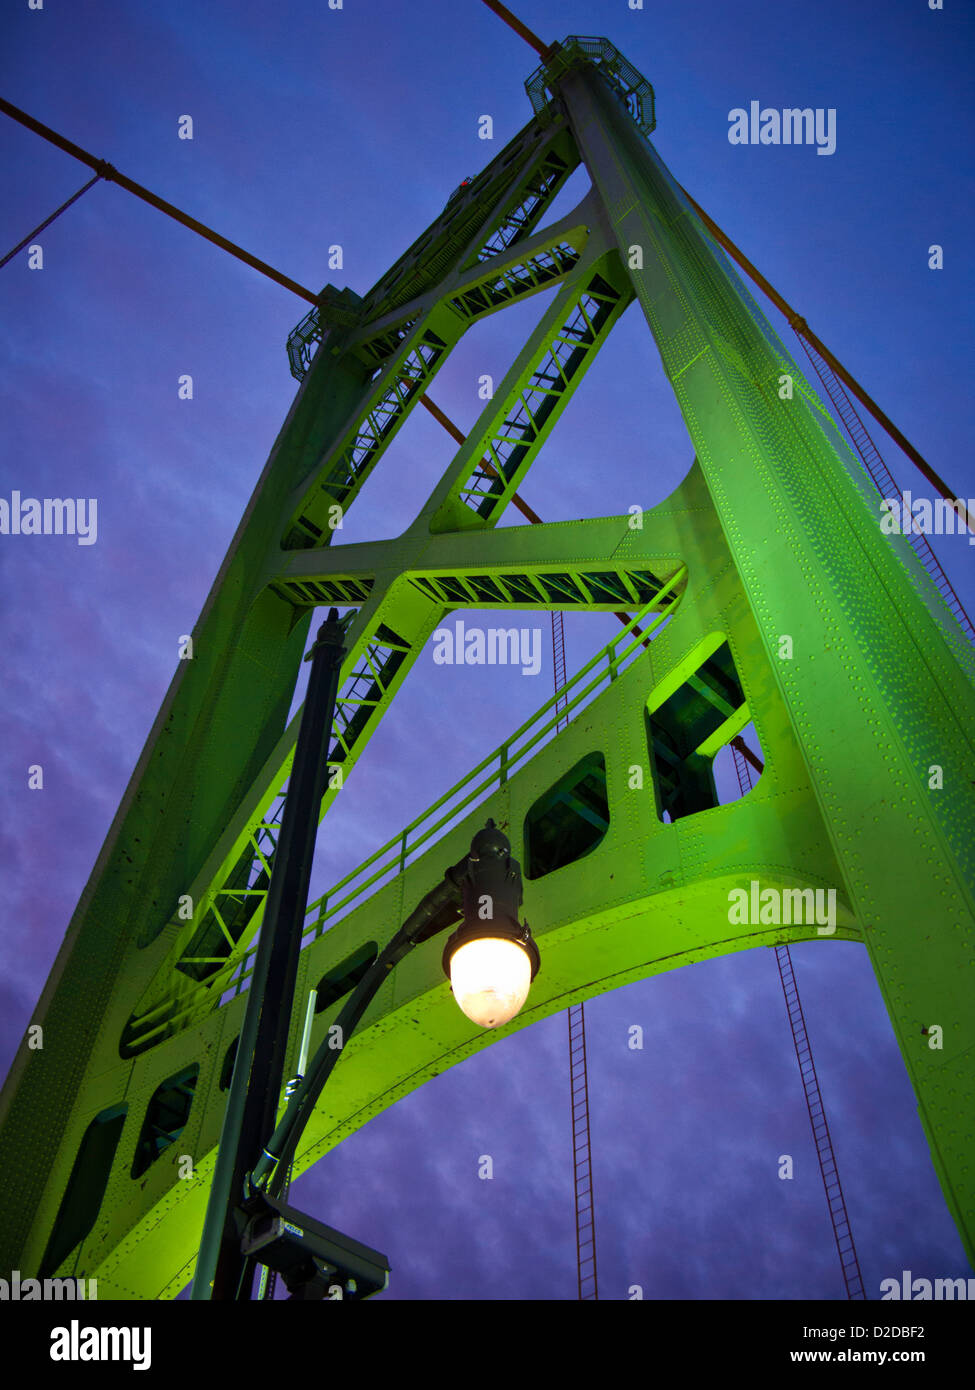 Una torre di Angus L. MacDonald ponte di sospensione è accesa fino al crepuscolo in Halifax, Nova Scotia, Canada. Foto Stock